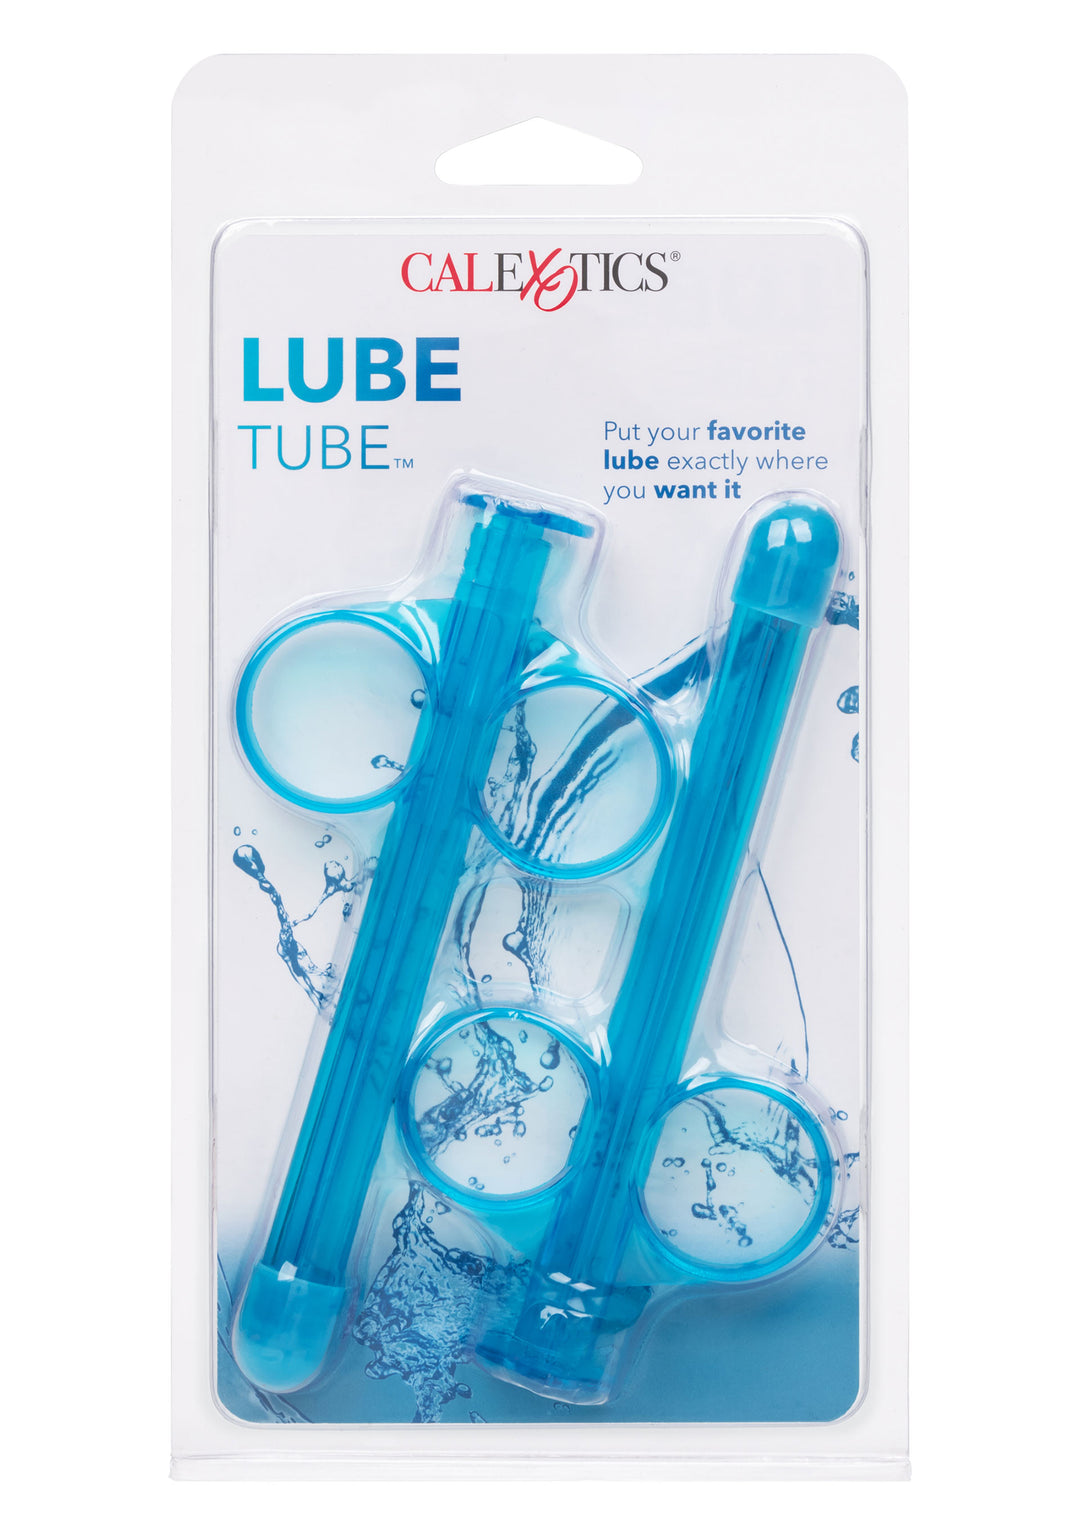 Siringa vaginale anale dispenser per lubrificante blu